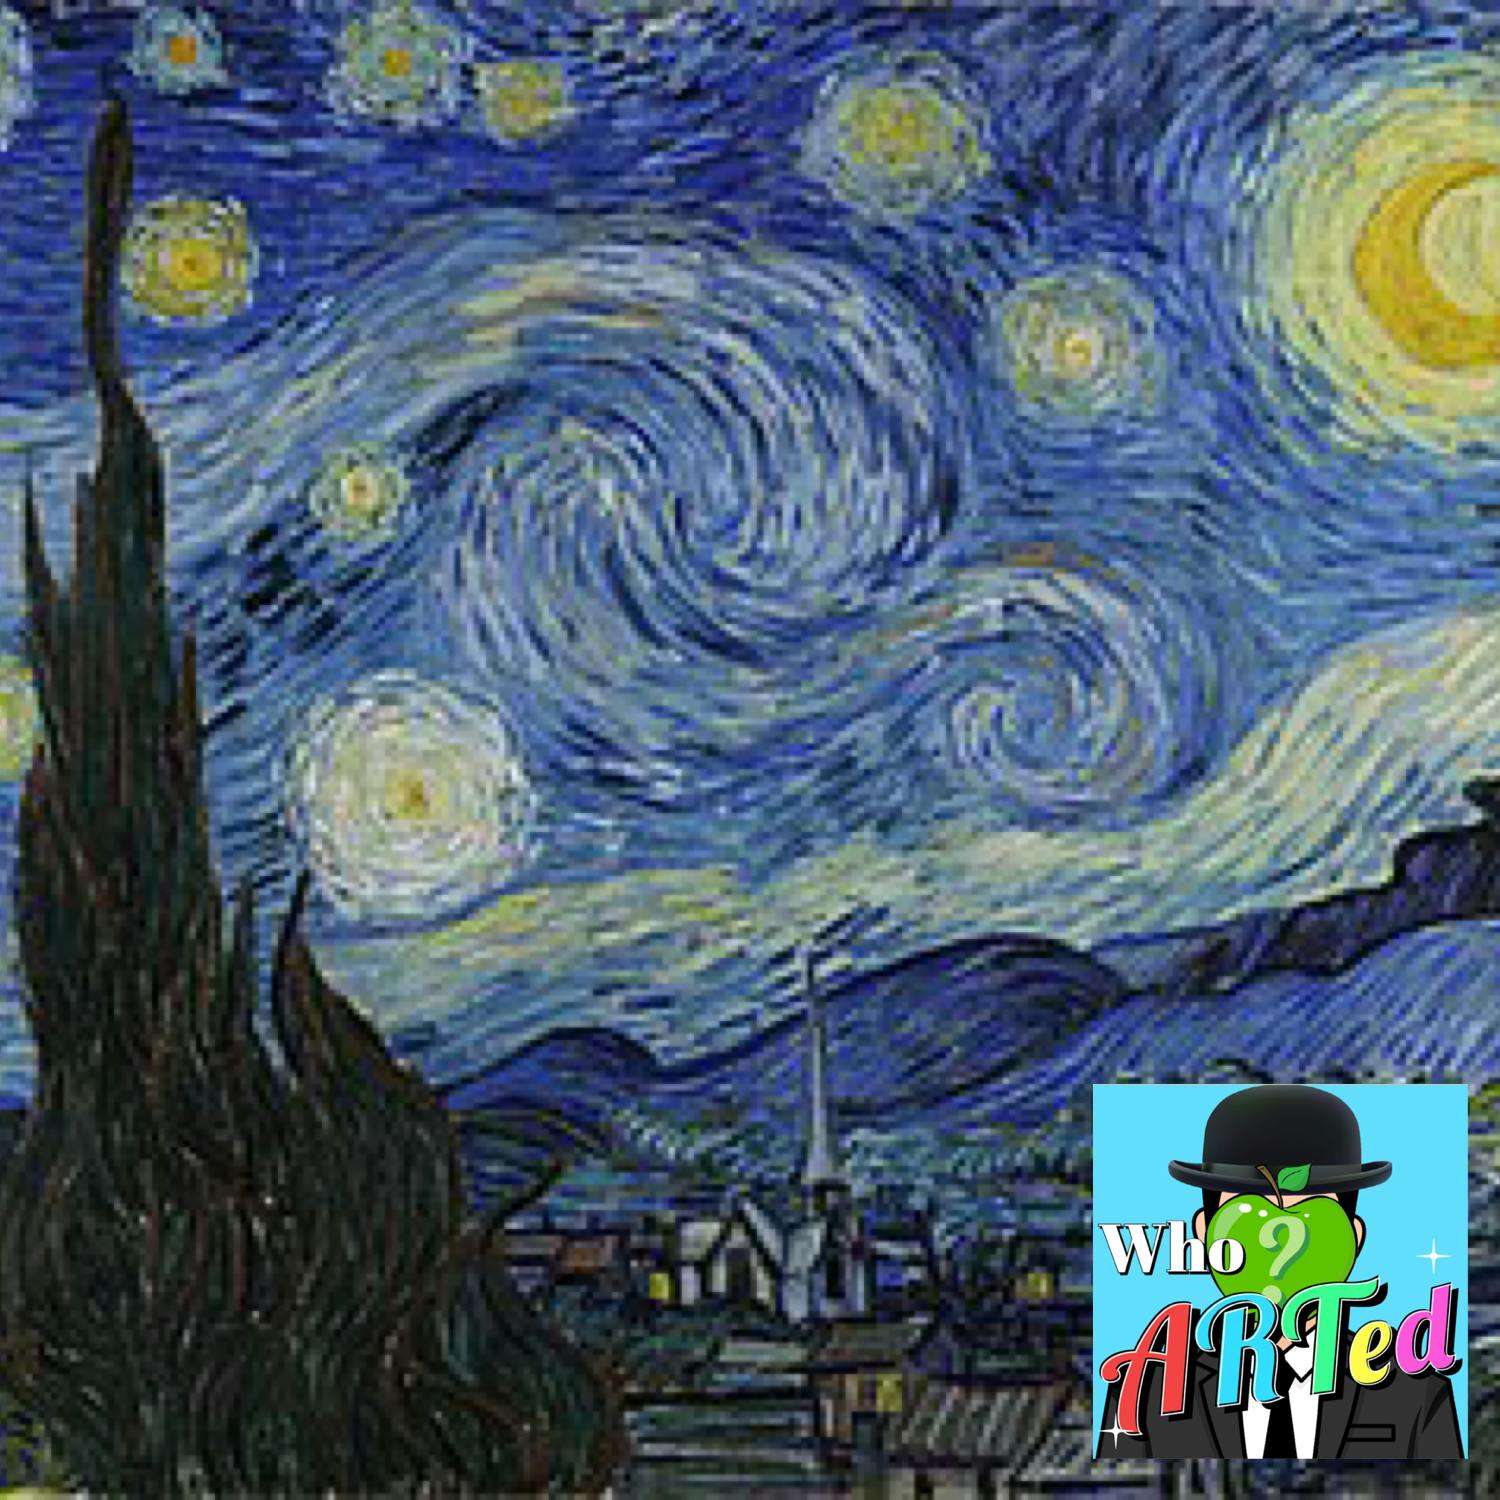 Vincent van Gogh | The Starry Night